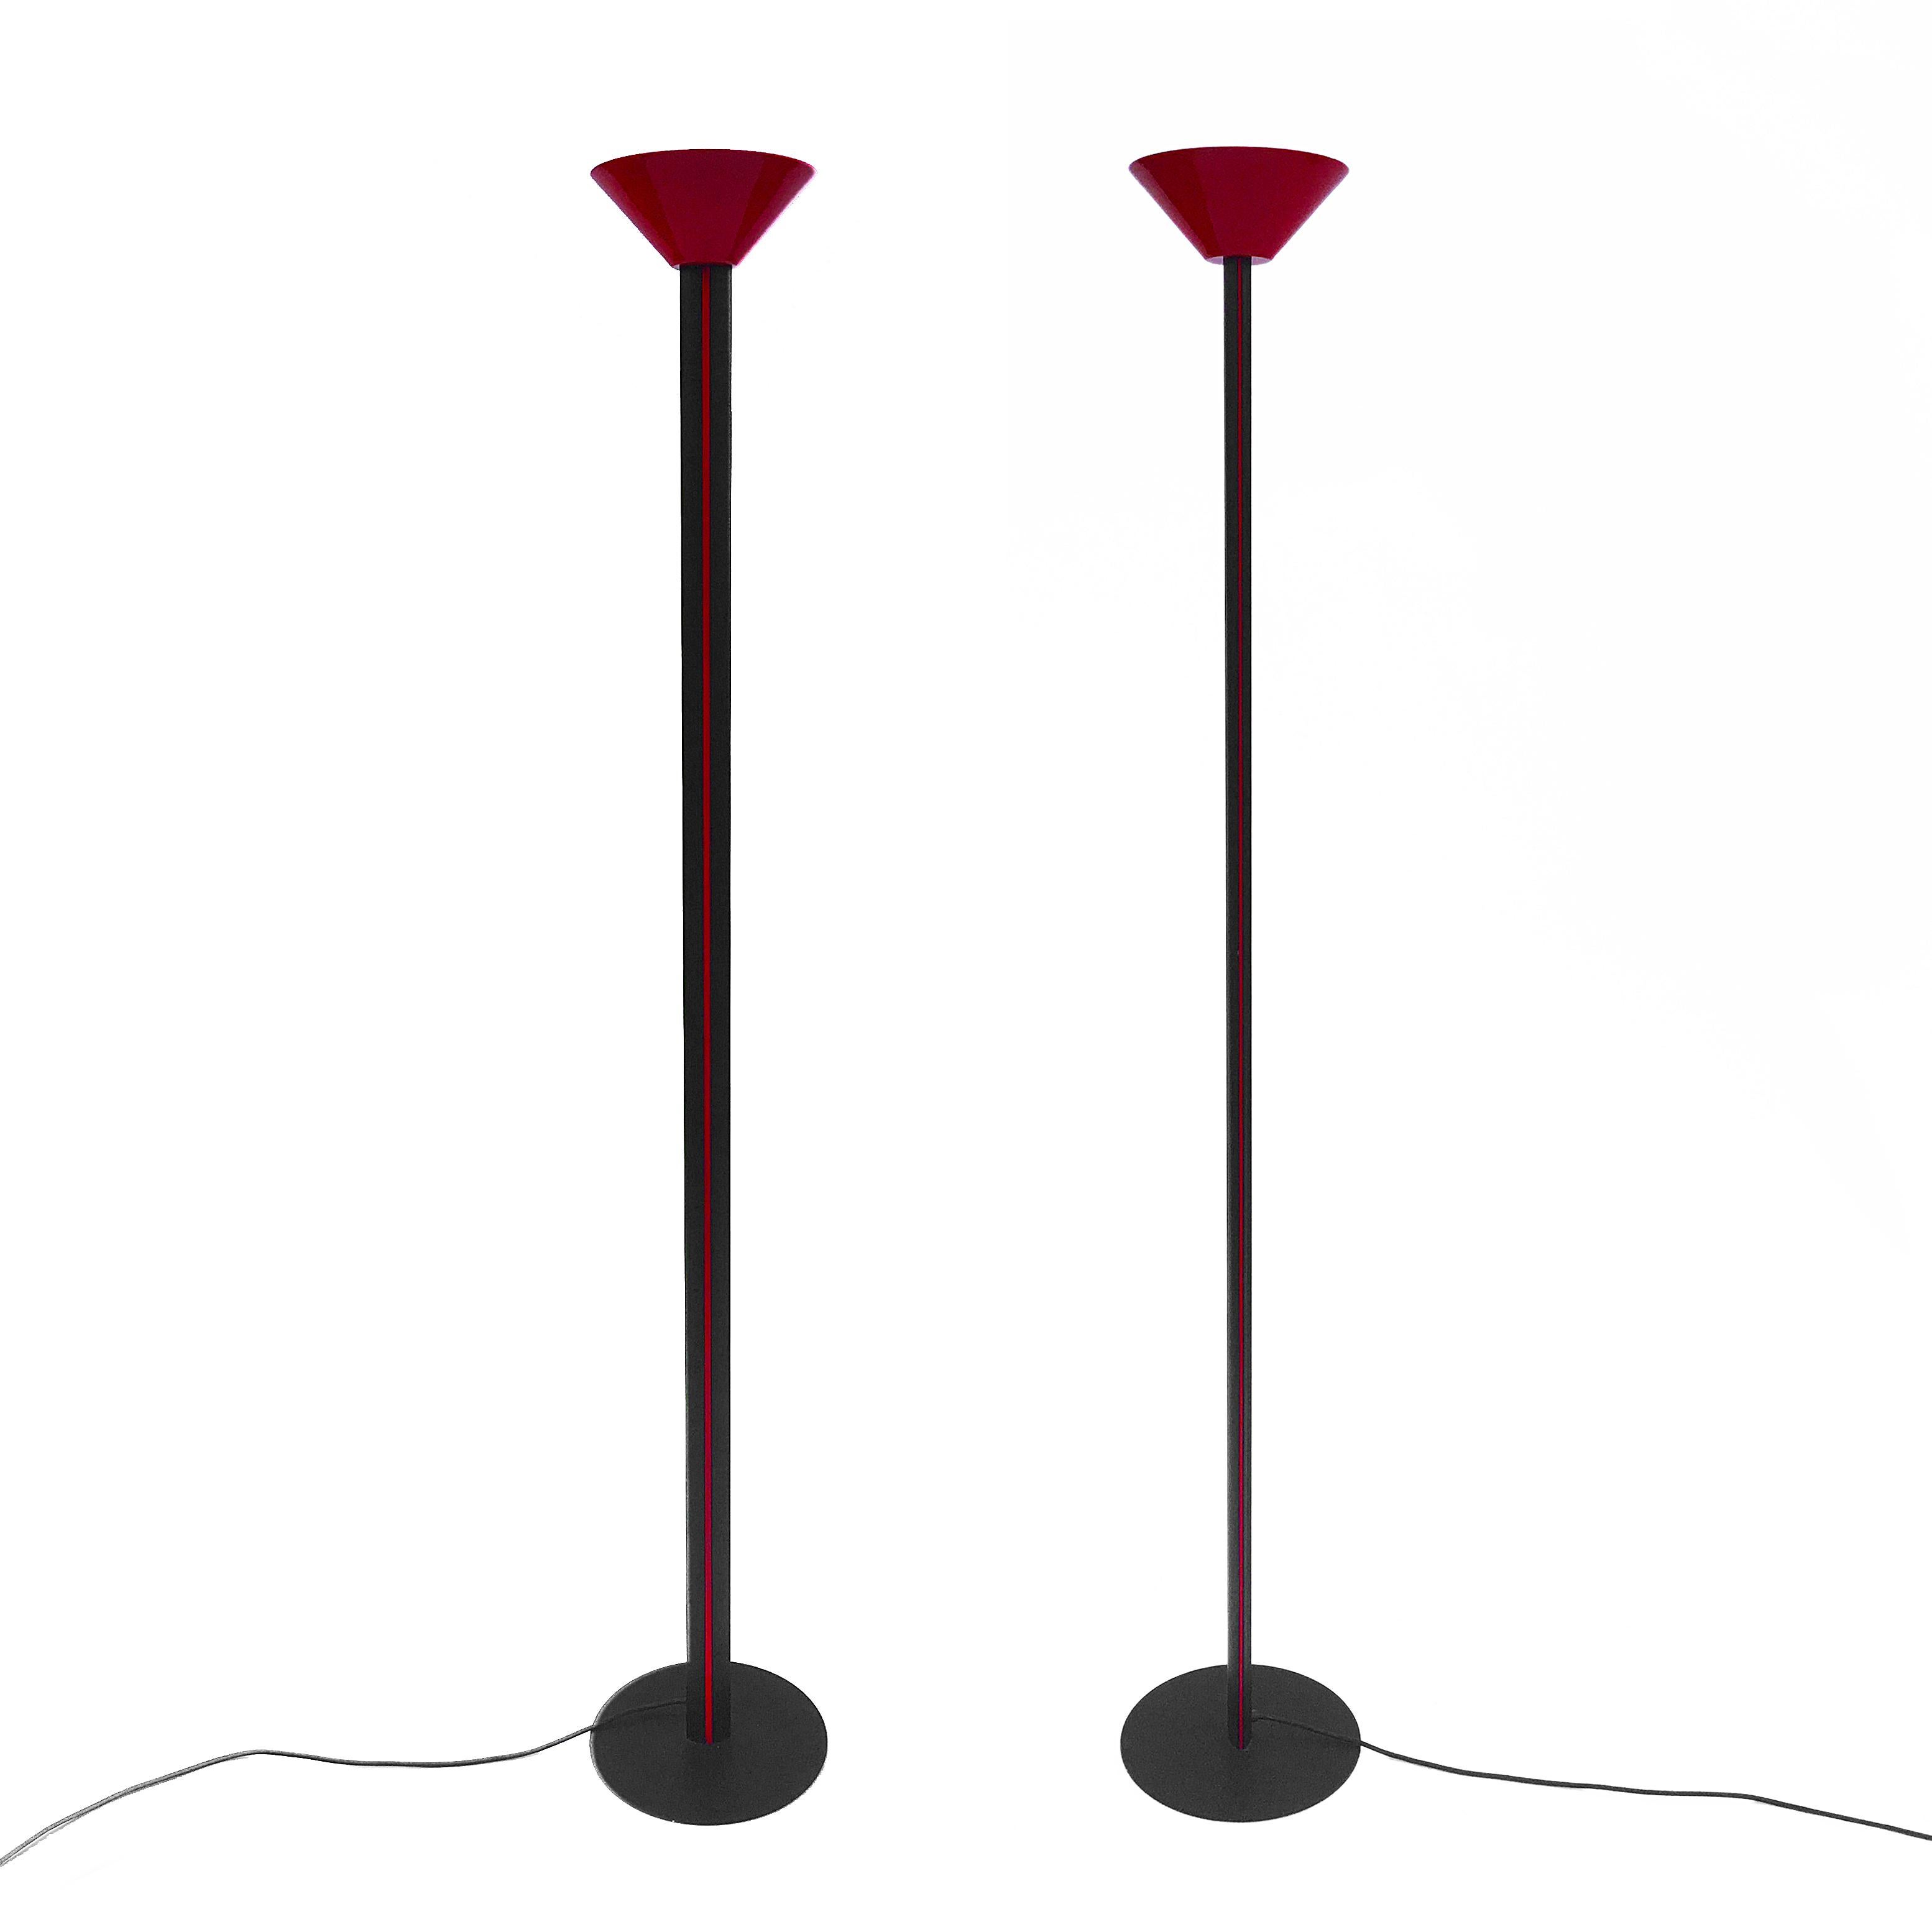 Memphis Inspired Uplighters 1980s Floor Lamp Red Black Postmodern Sottsass Style For Sale 5